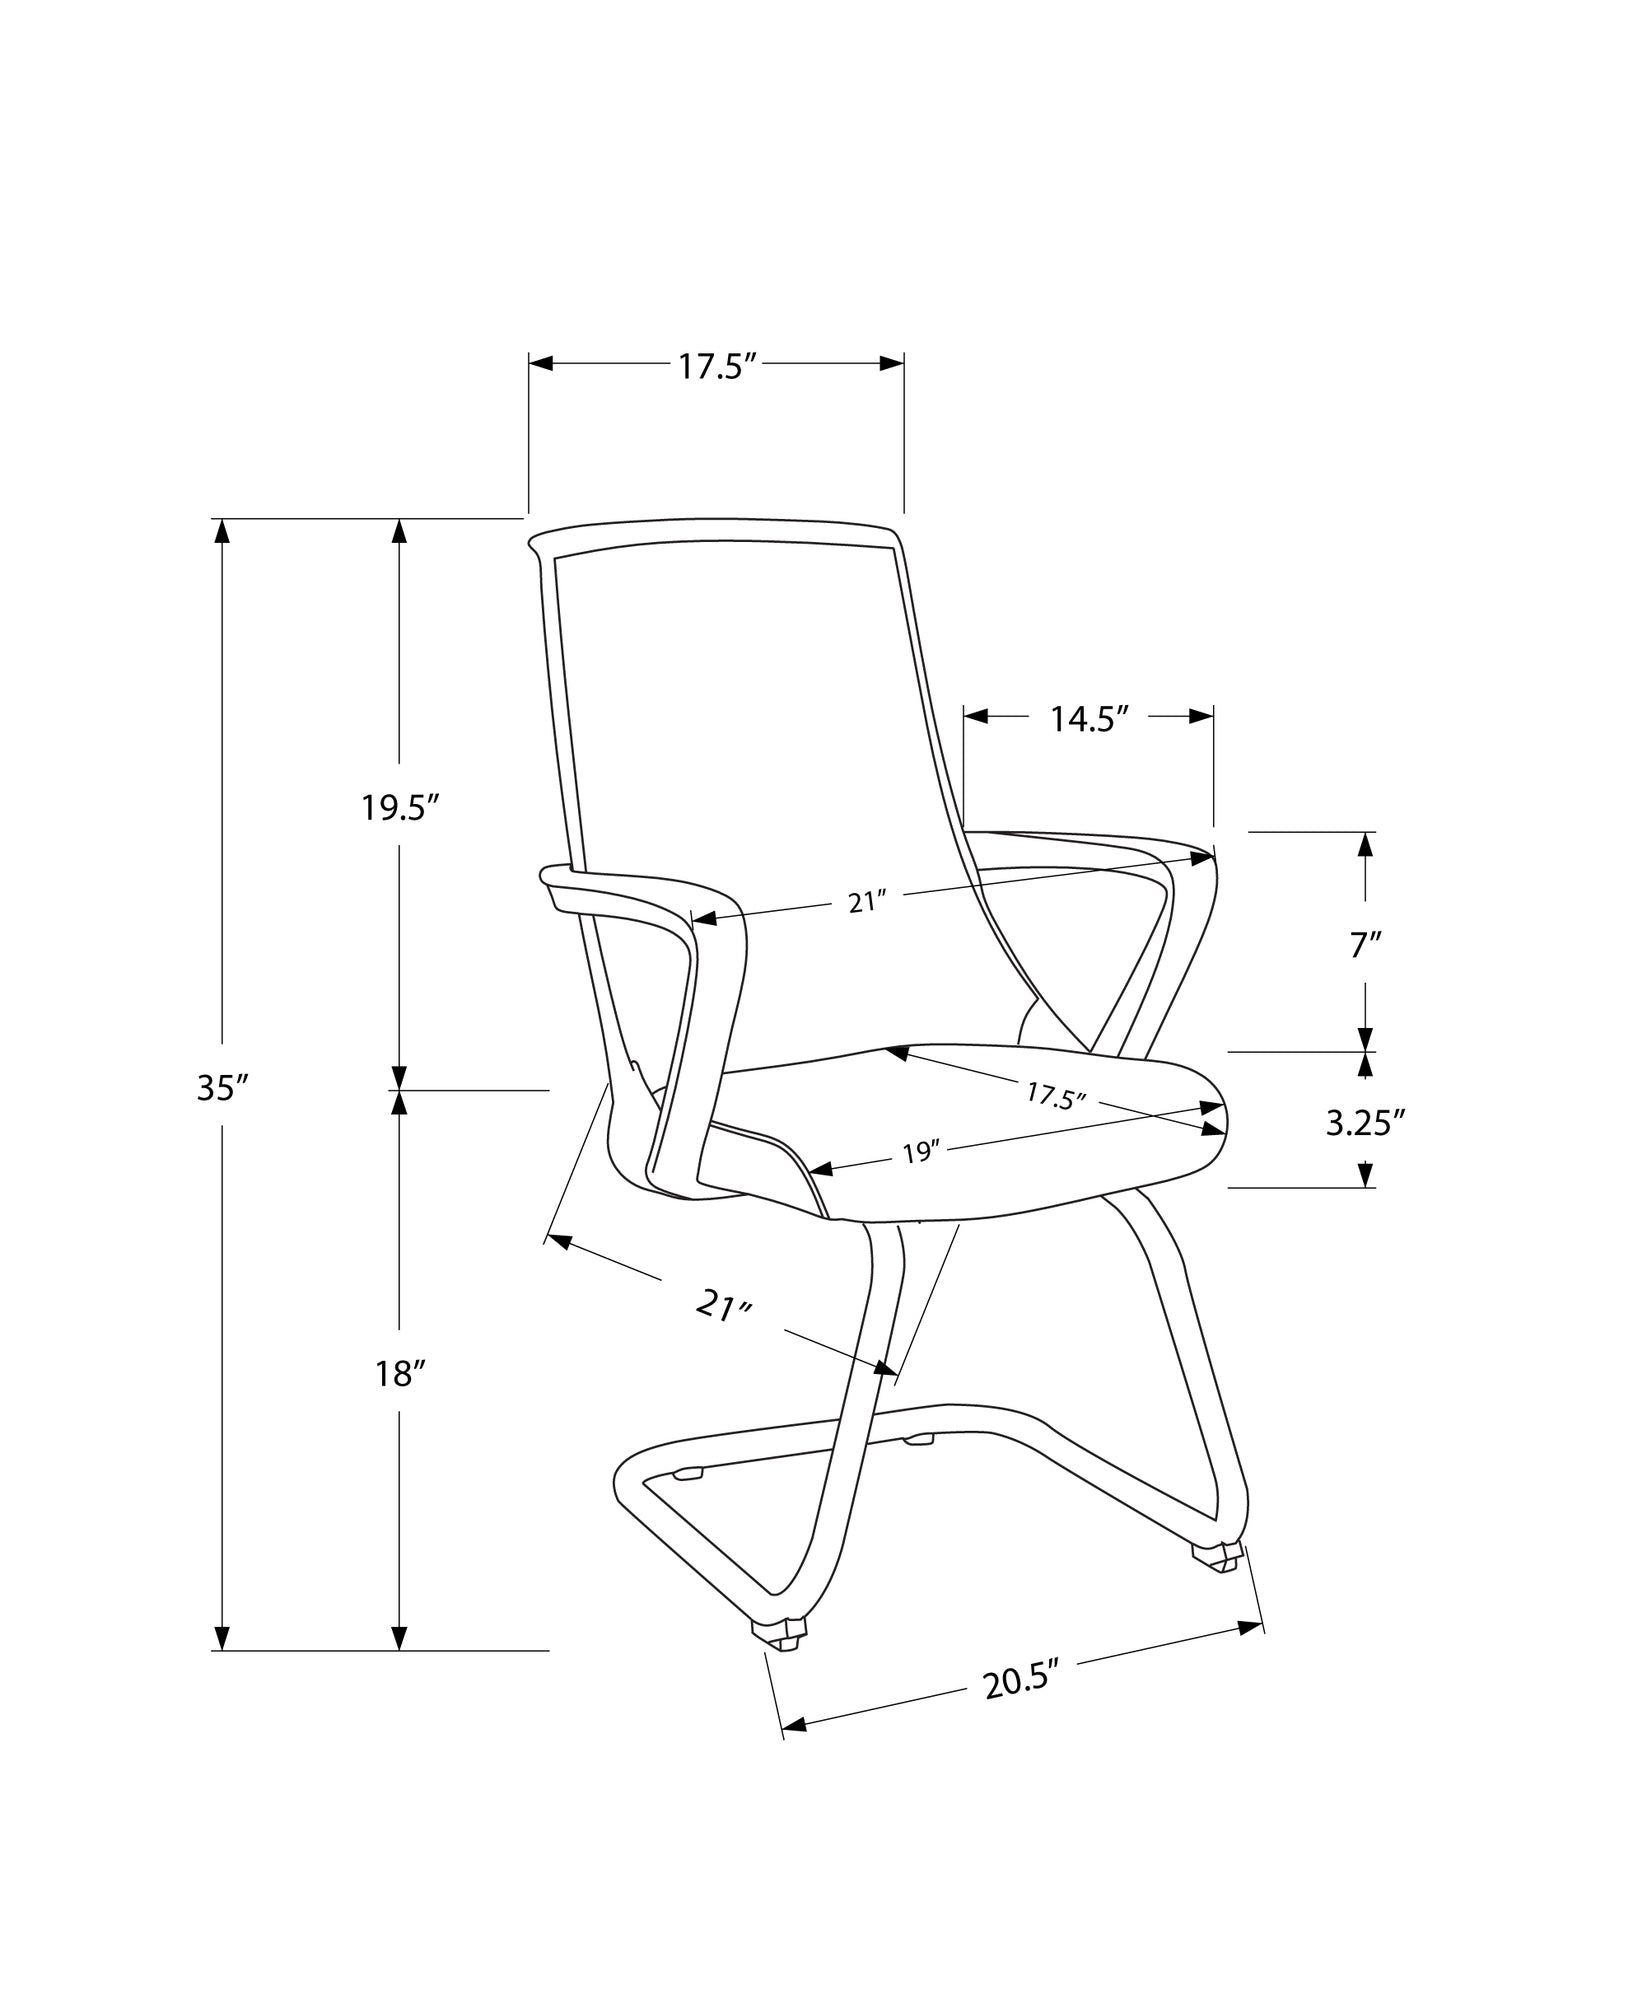 Office Chair - 2Pcs / Guest Black Mesh Mid-Back